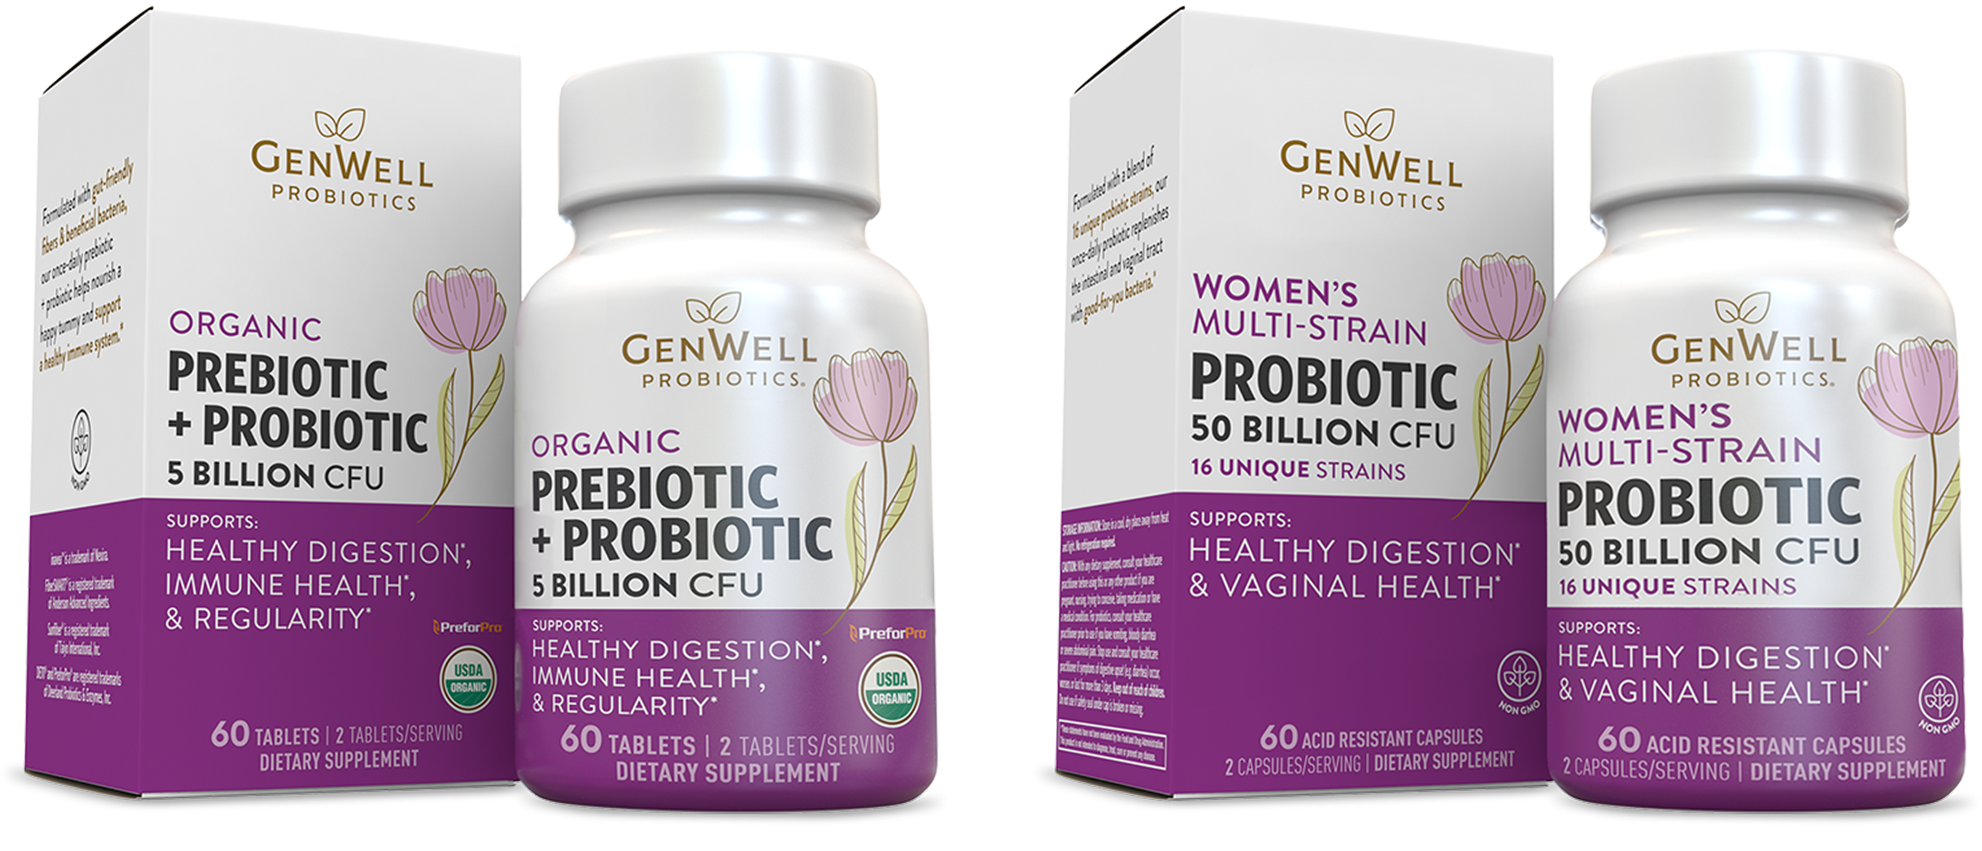 GenWell Probiotics Product